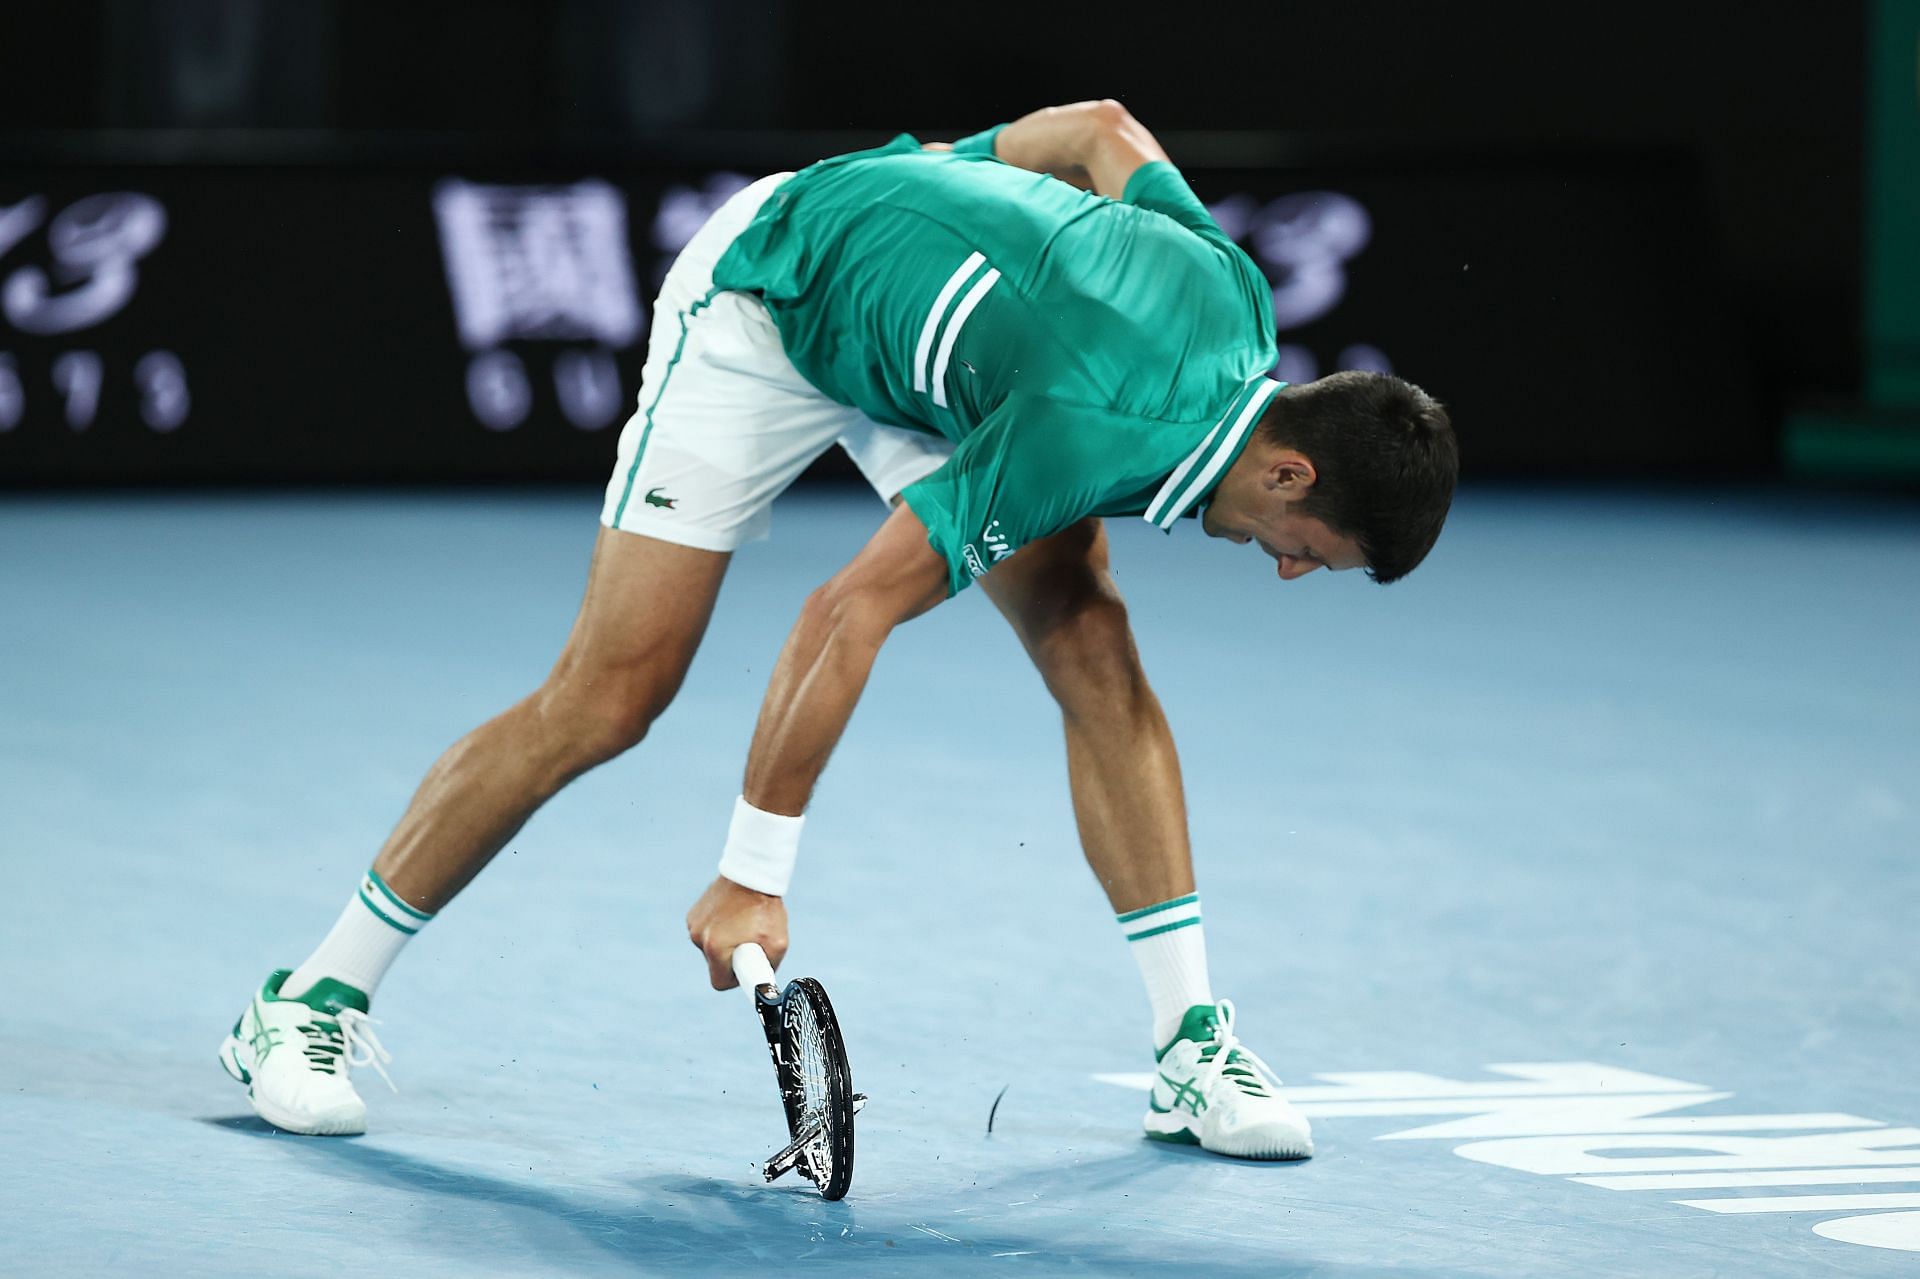 Novak Djokovic smashes his racquet in frustration during his 2021 Australian Open quarterfinal match against Alexander Zverev.